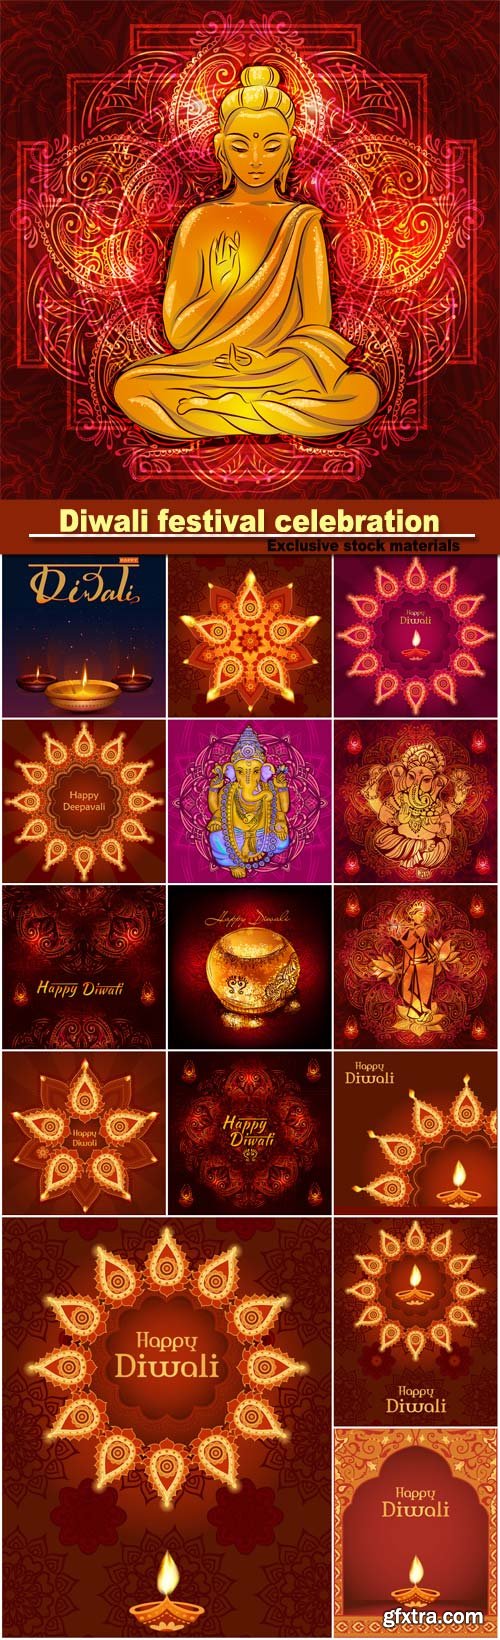 Diwali festival celebration in India, Ganesh Puja, Buddha sitting in the lotus position